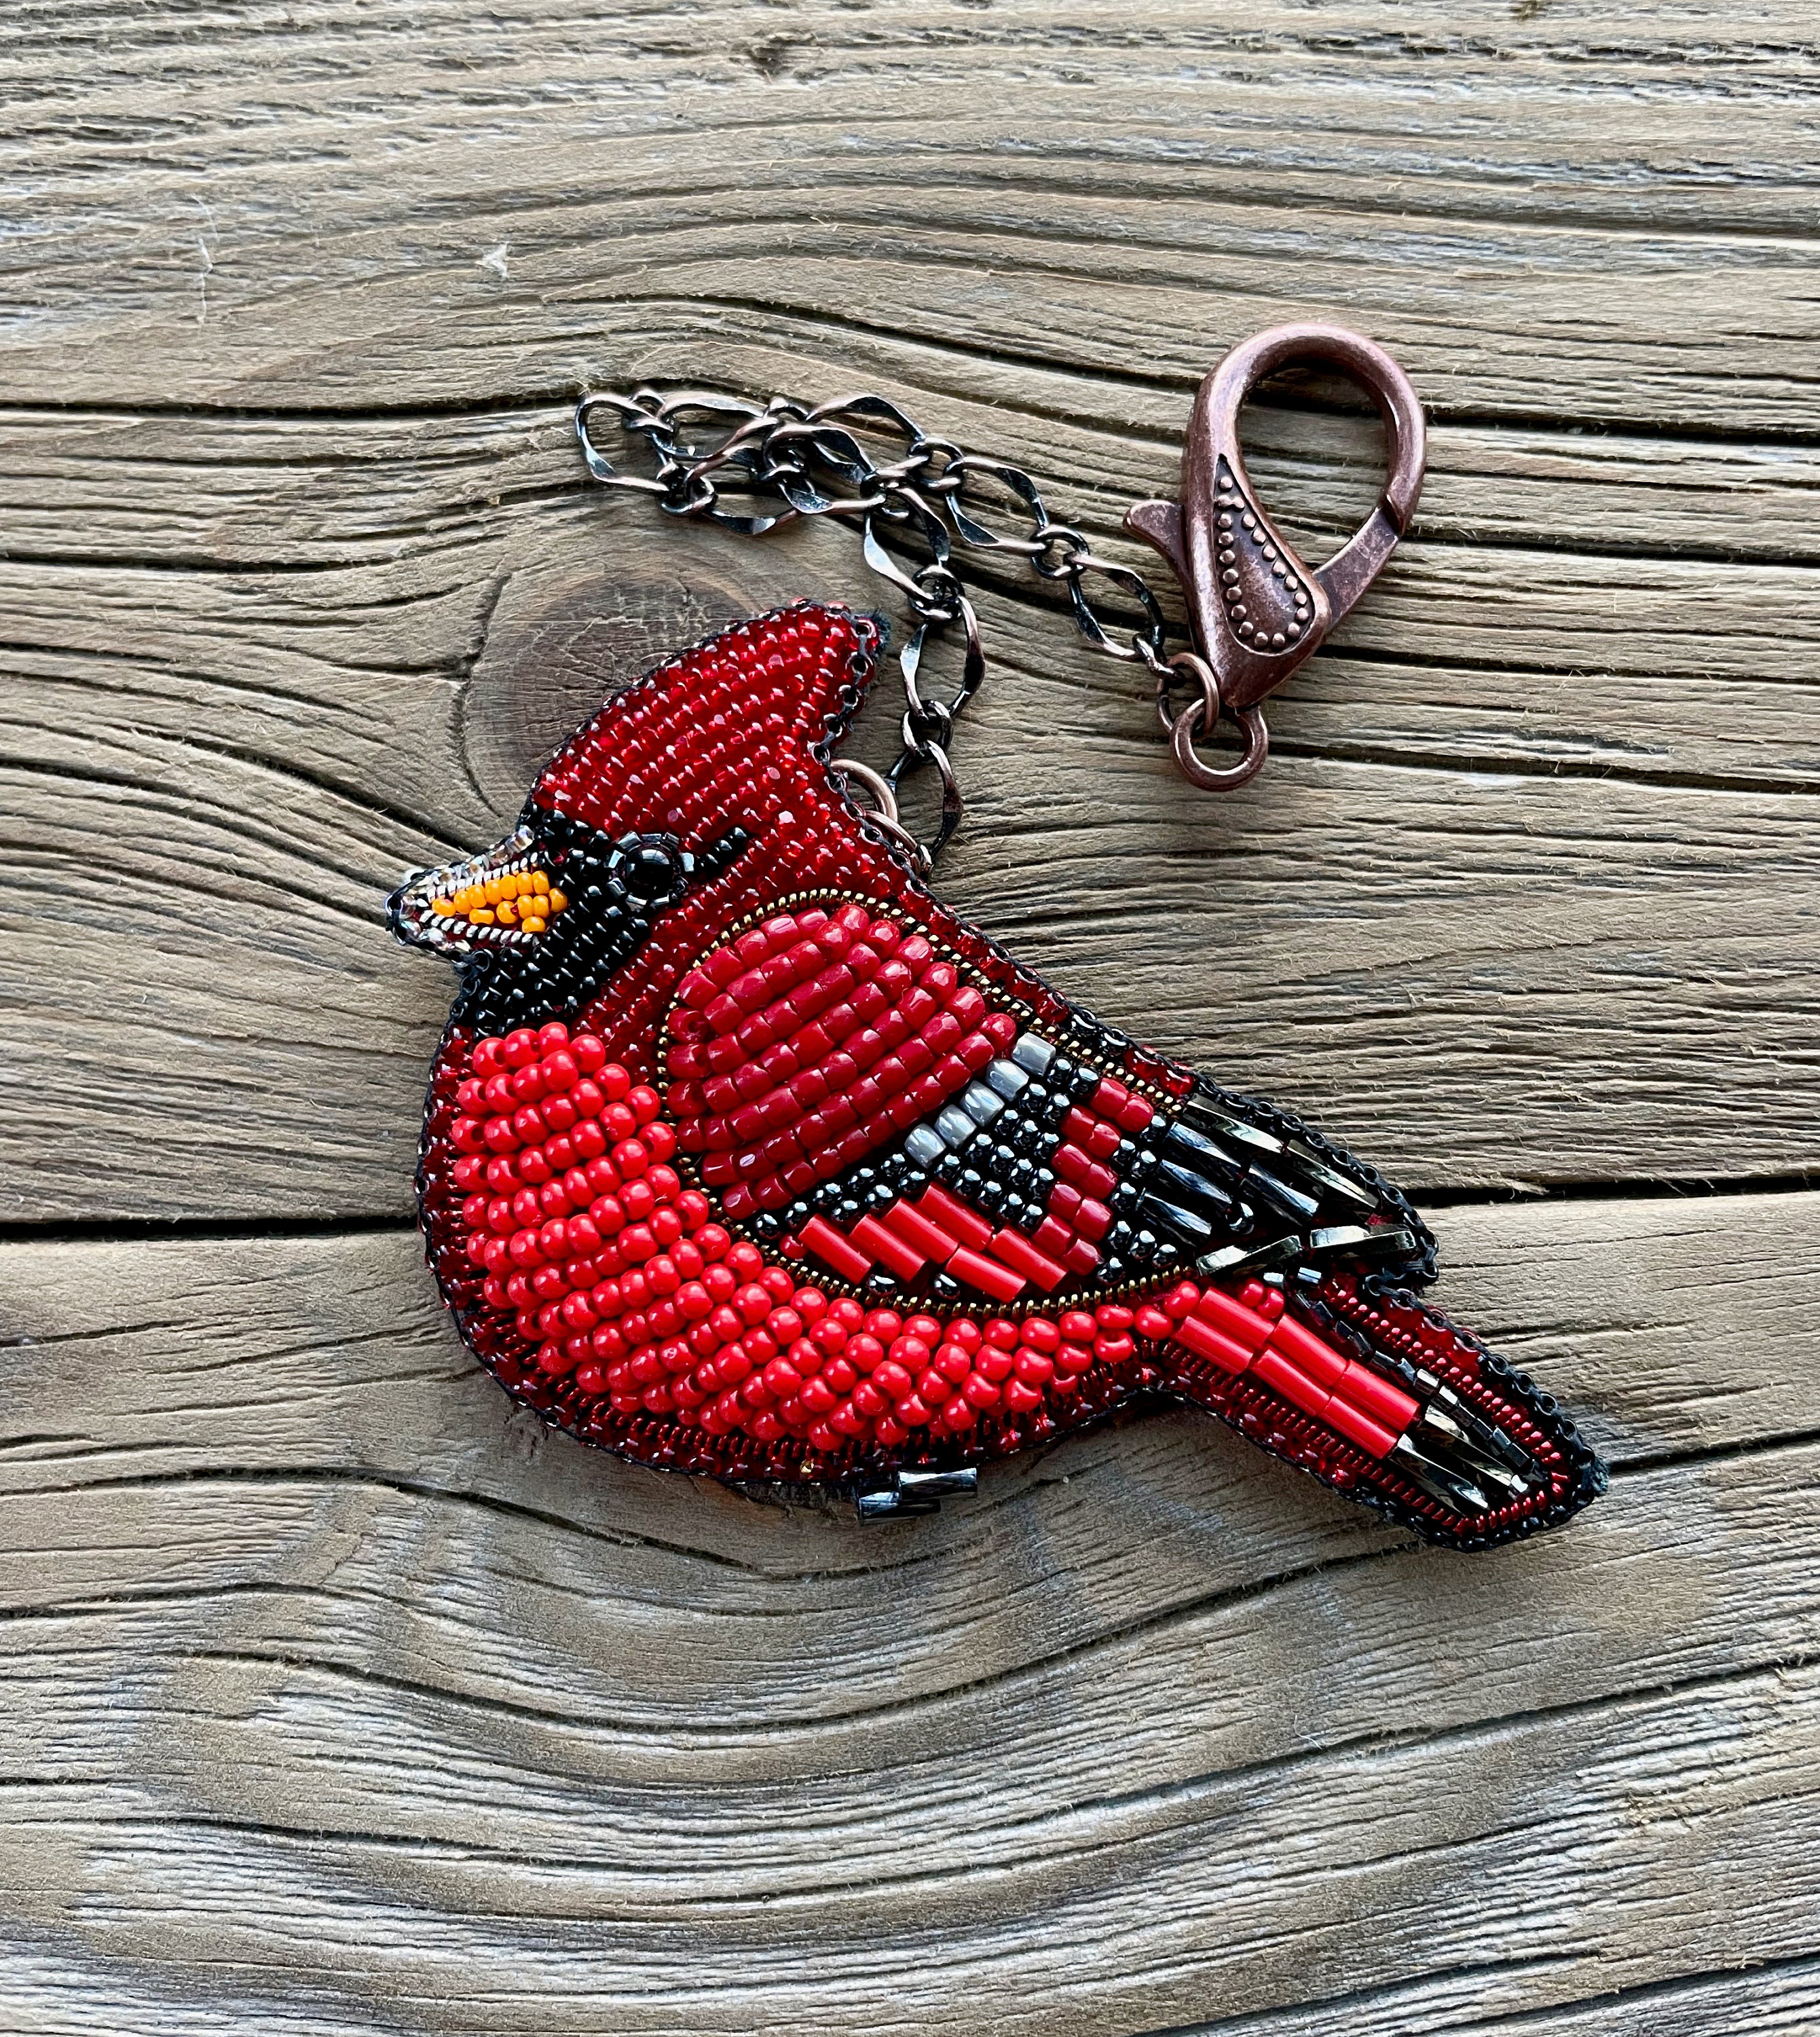 Cardinal Leather Keychain